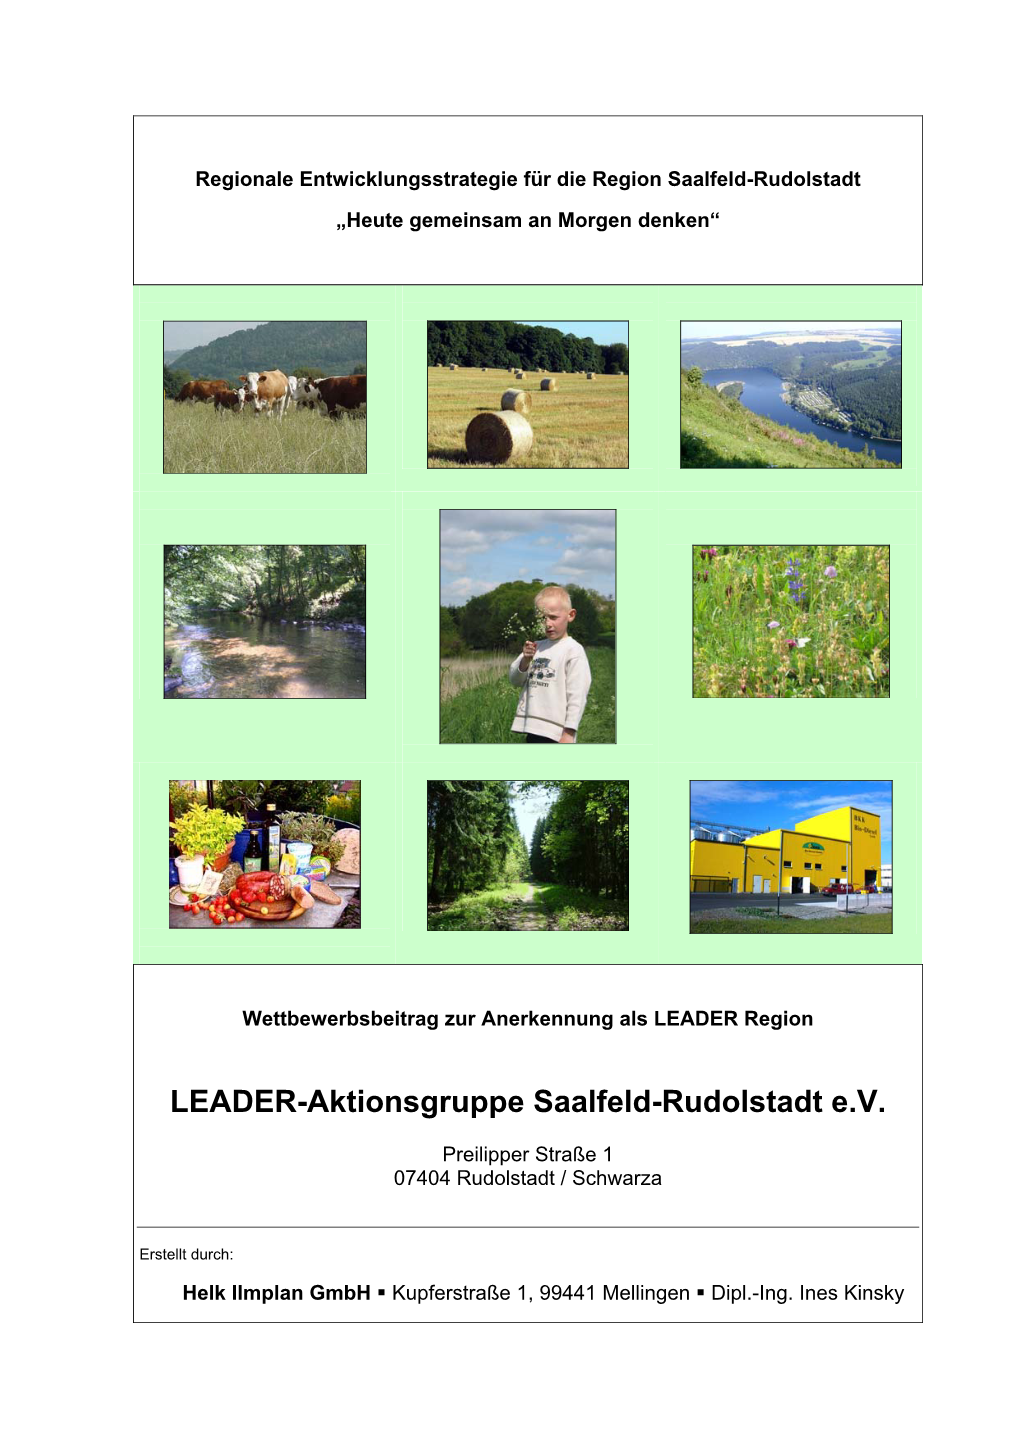 LEADER-Aktionsgruppe Saalfeld-Rudolstadt E.V